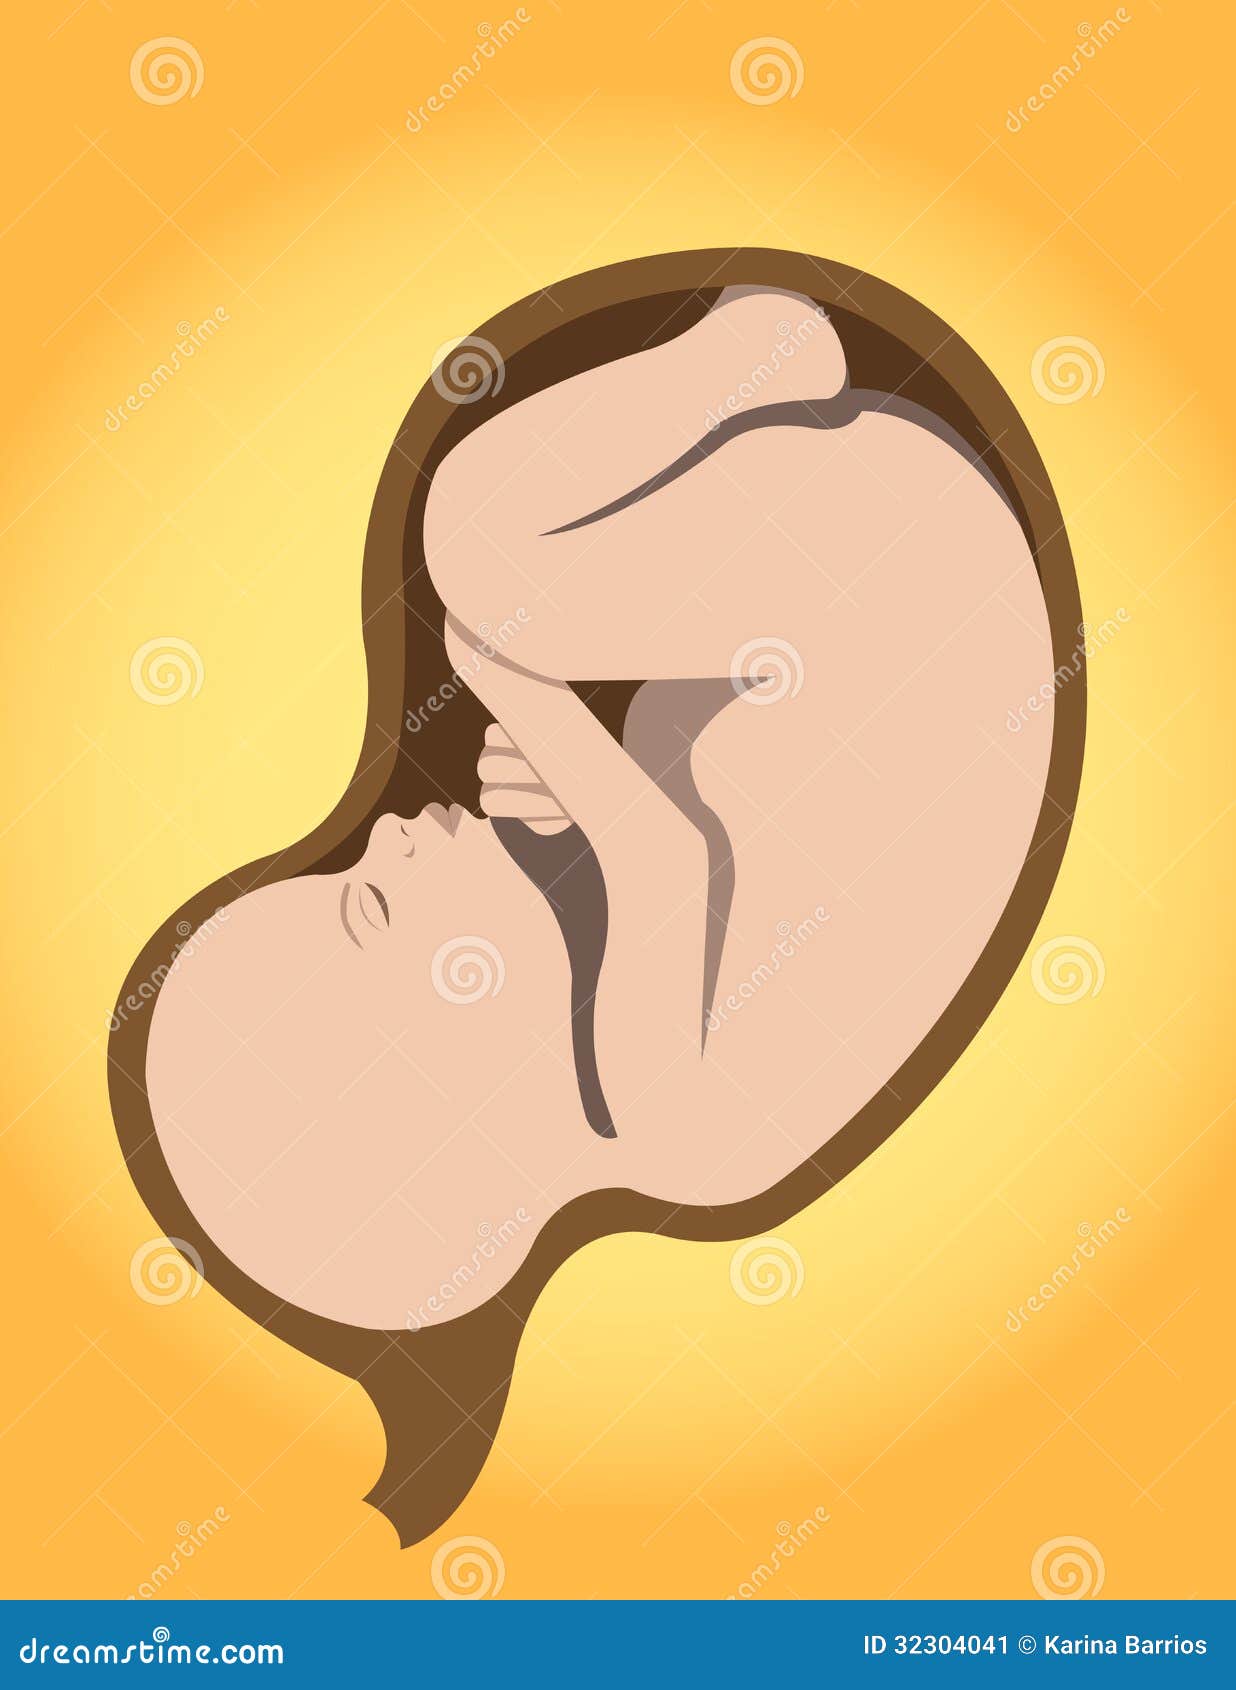 Fetus stock illustration. Illustration of uterus, child ...